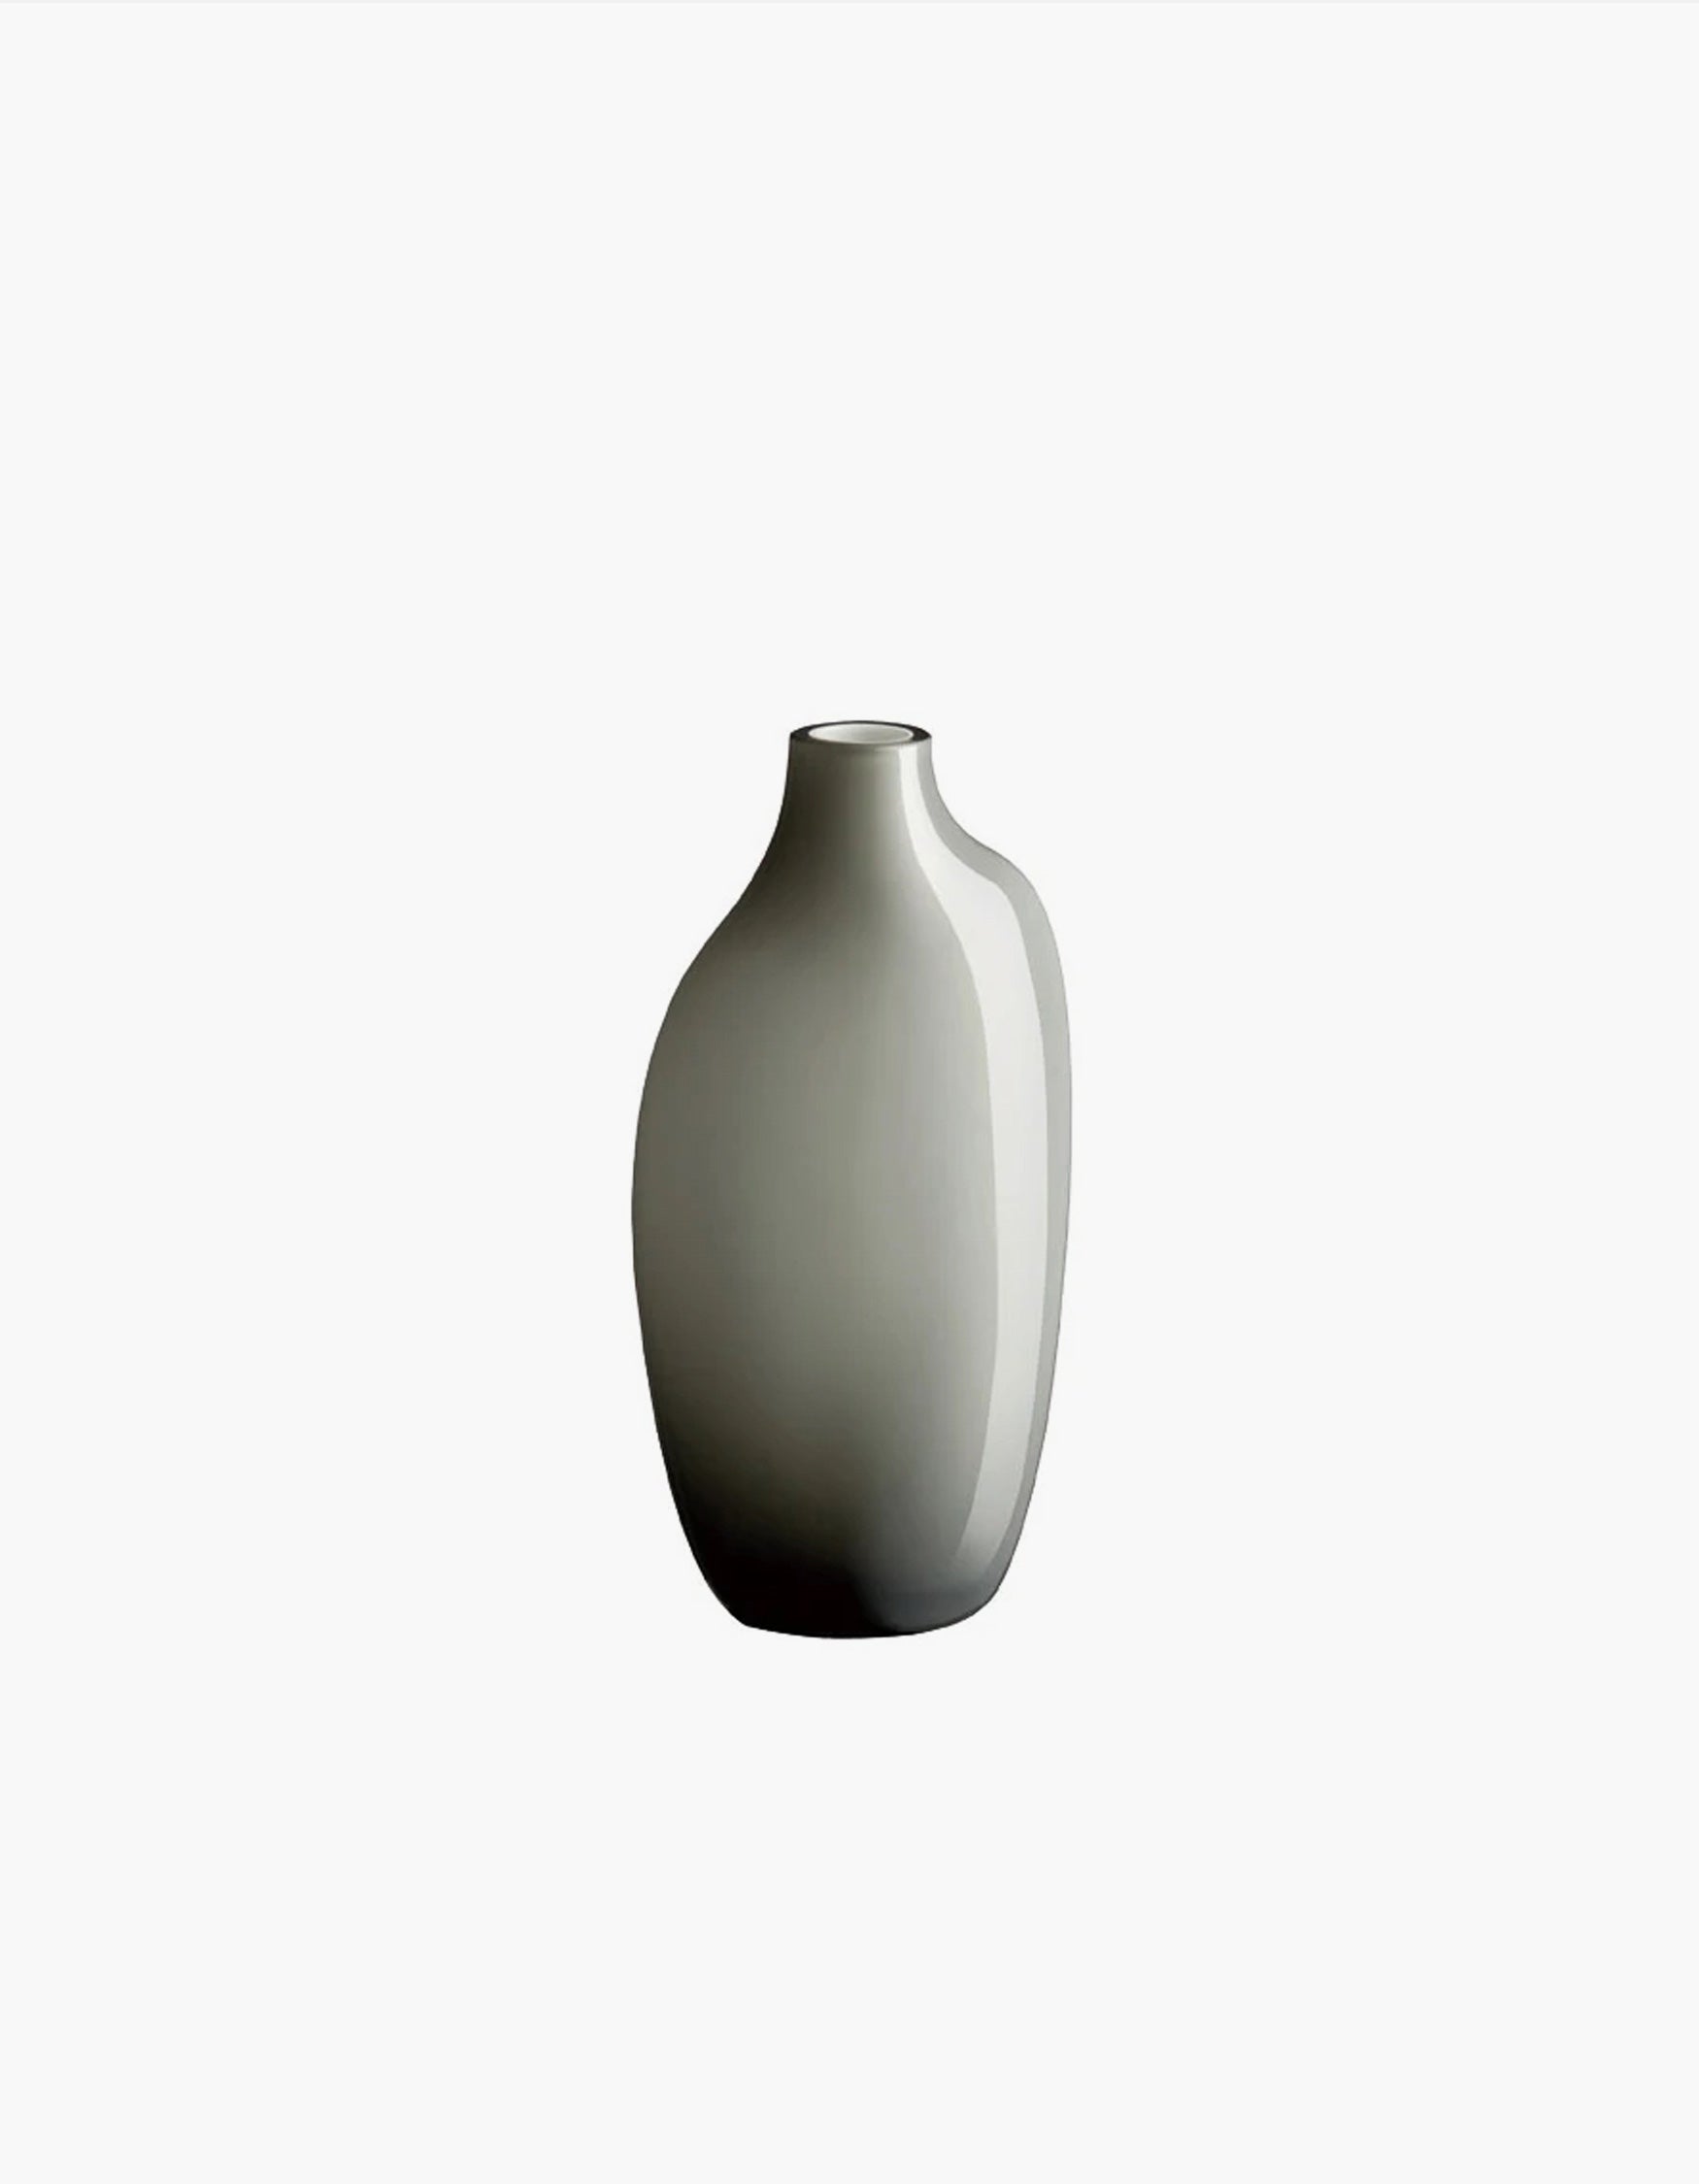 Sacco Vase No. 3 Photo